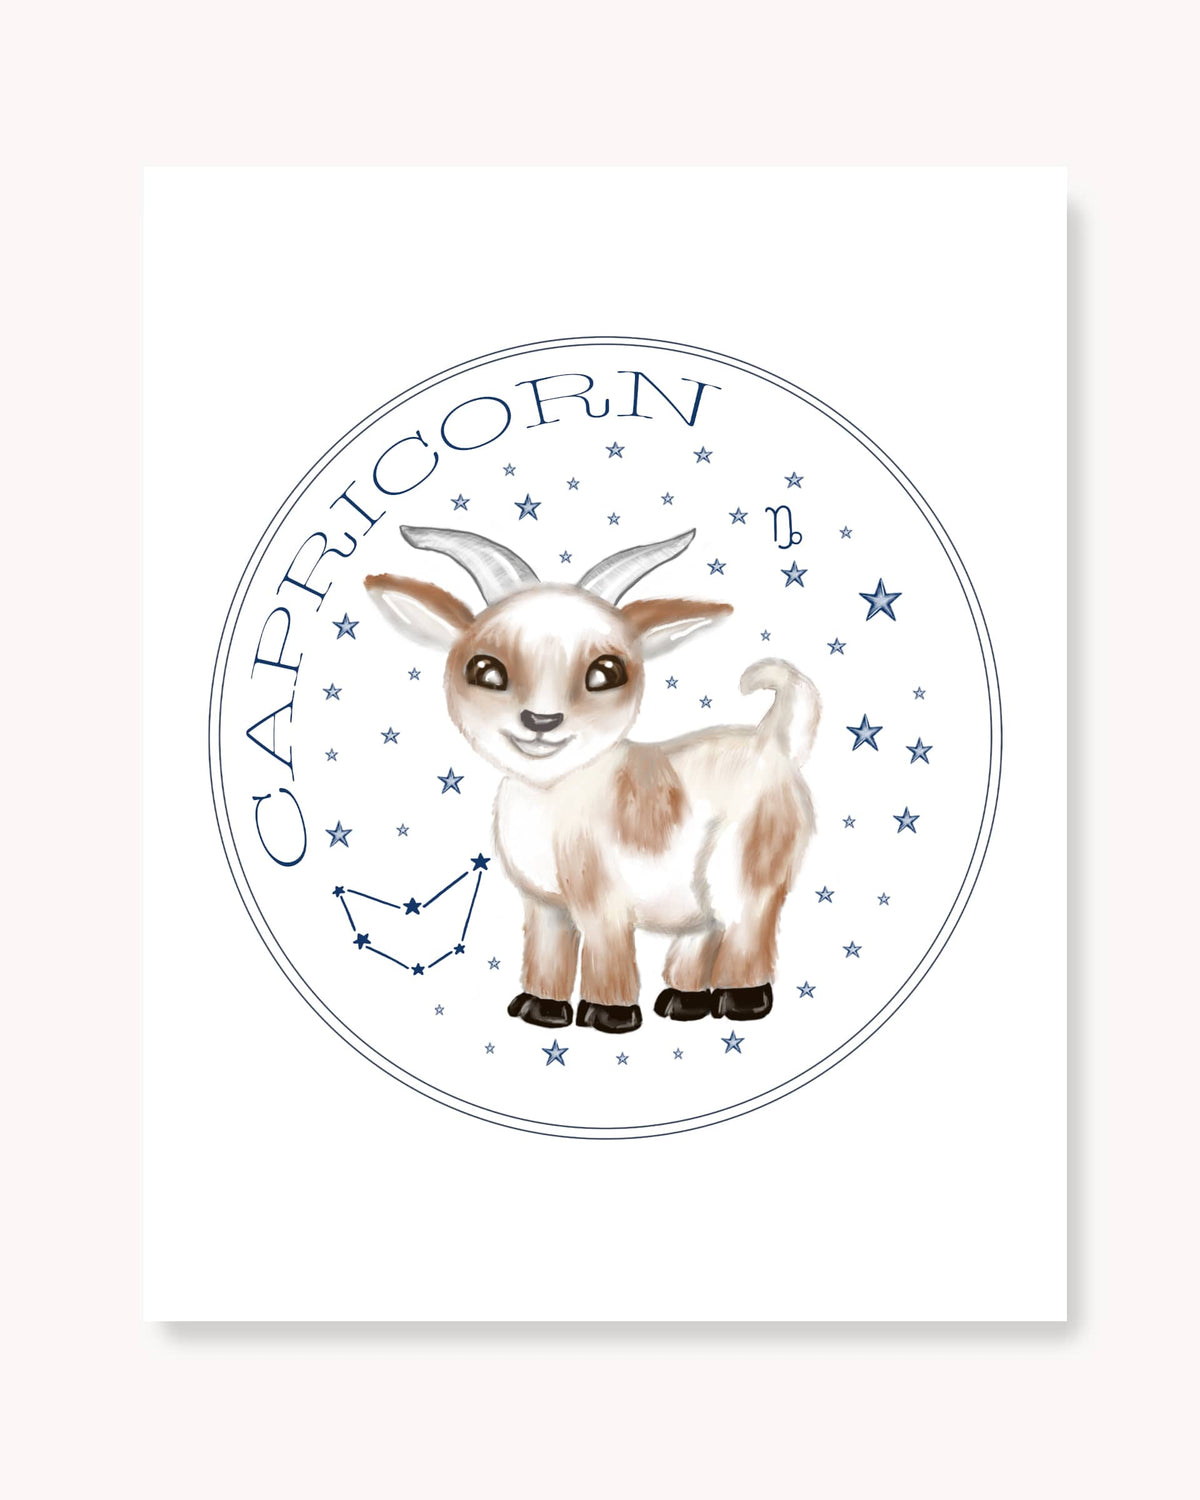 Hand drawn stars zodiac nursery decor wall art poster Capricorn cute baby animal farm goat